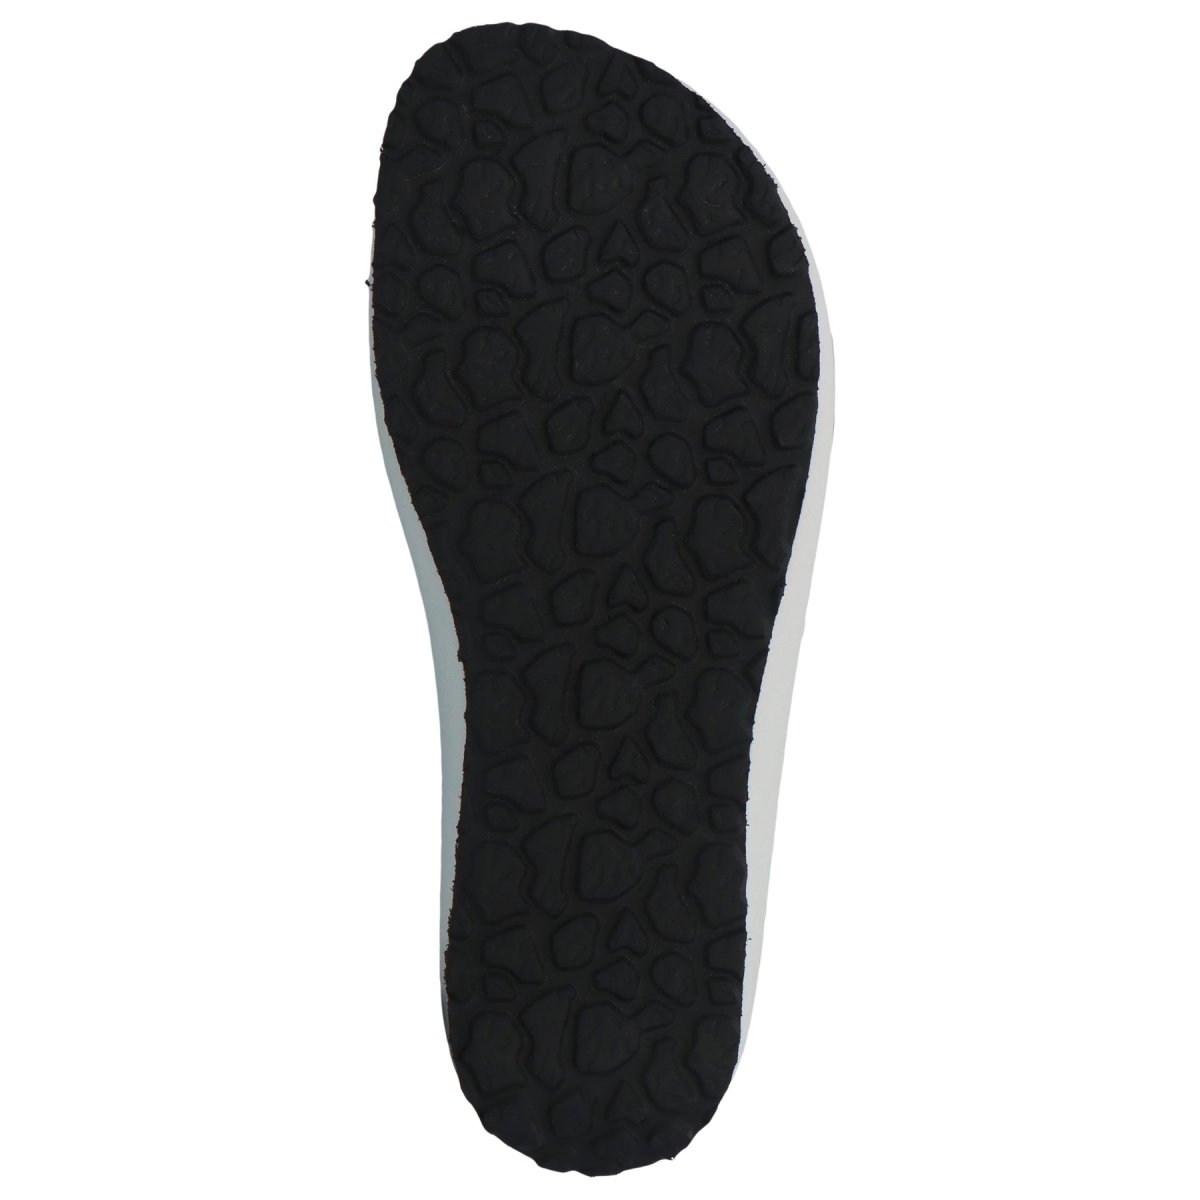 BERKEMANN MILA WOMEN'S SANDAL IN BLACK CALFSKIN - TLW Shoes